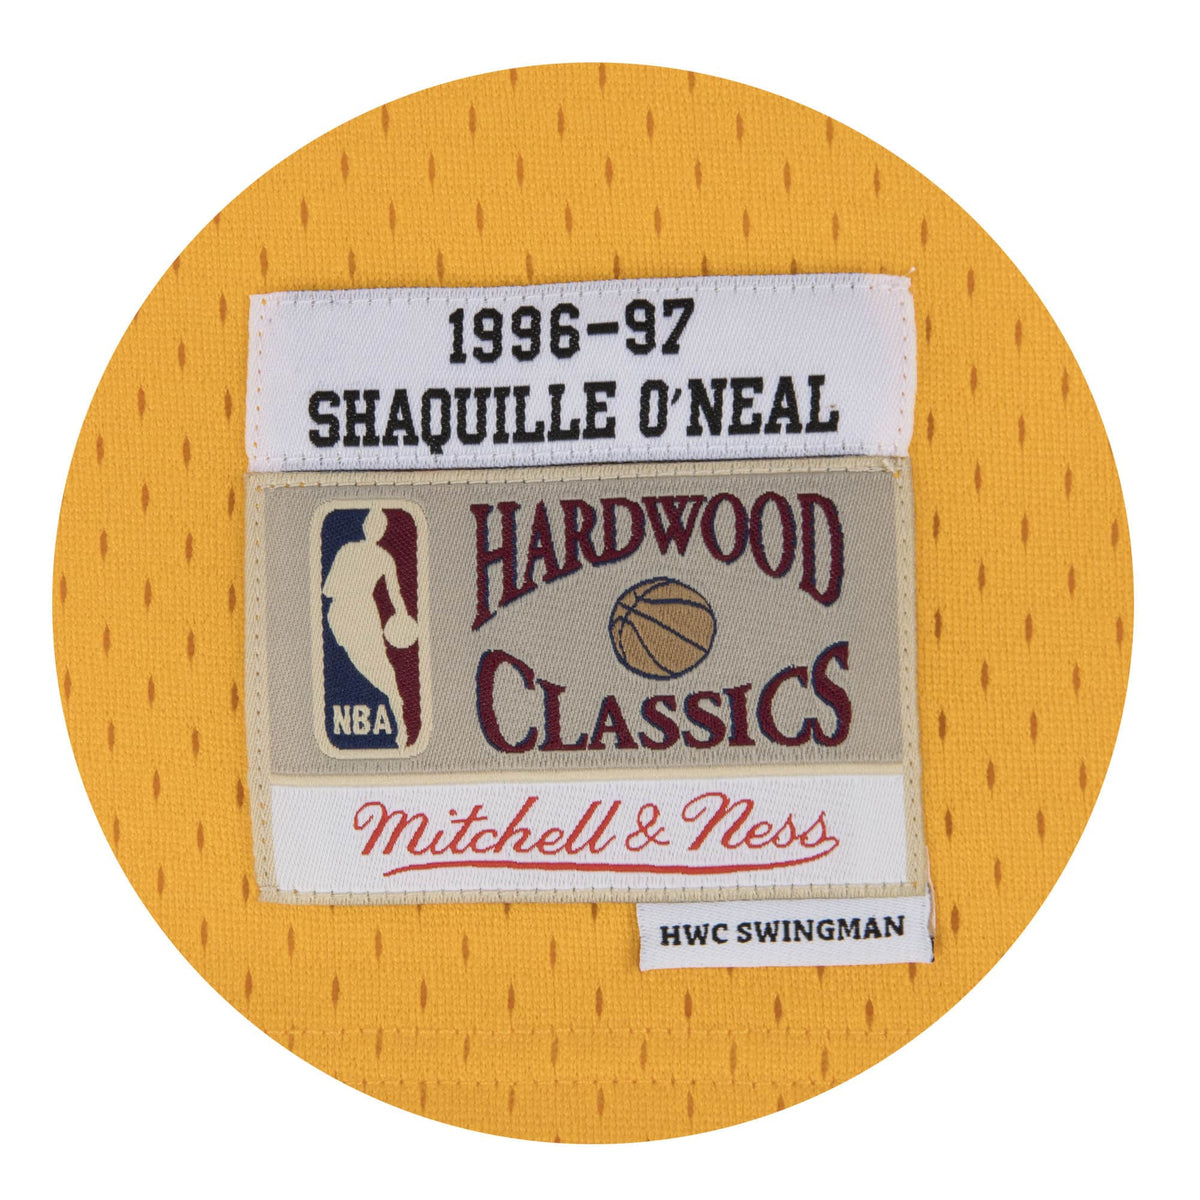 Los Angeles Lakers Shaquille O'Neal Alternate 1996-97 Swingman